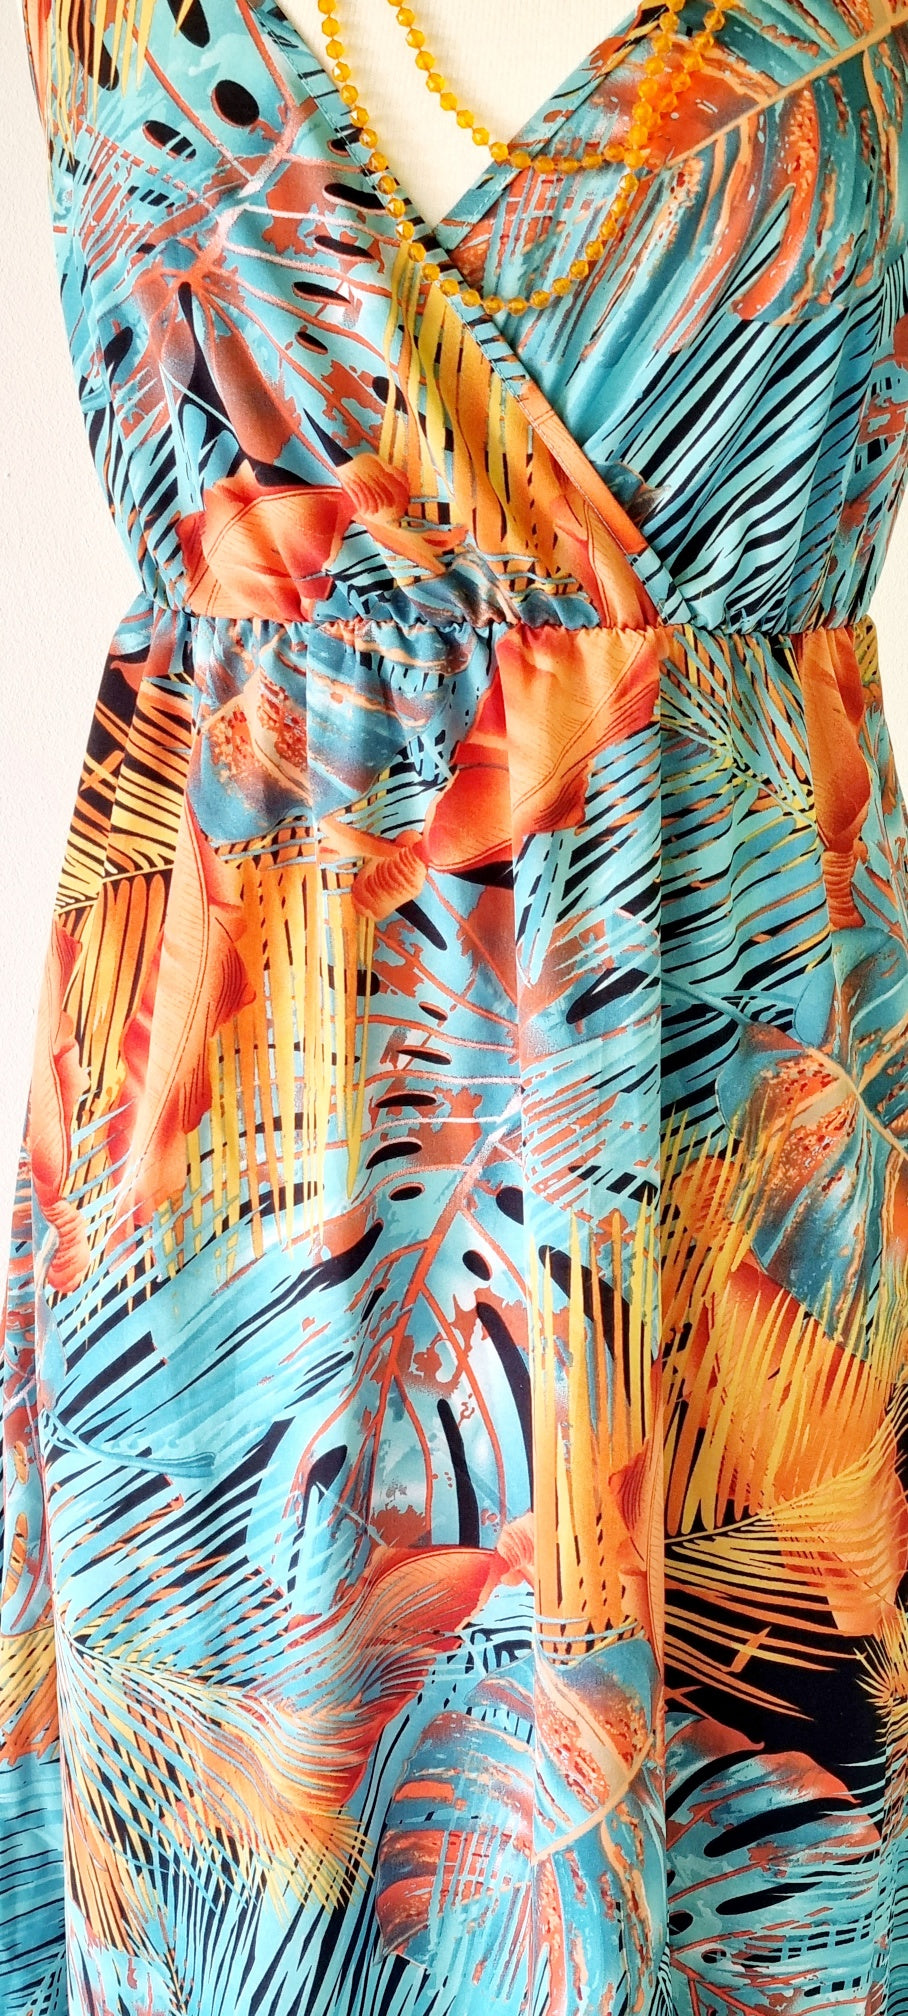 No Brand - Orange & Turquoise Maxi Summer Strap Dress